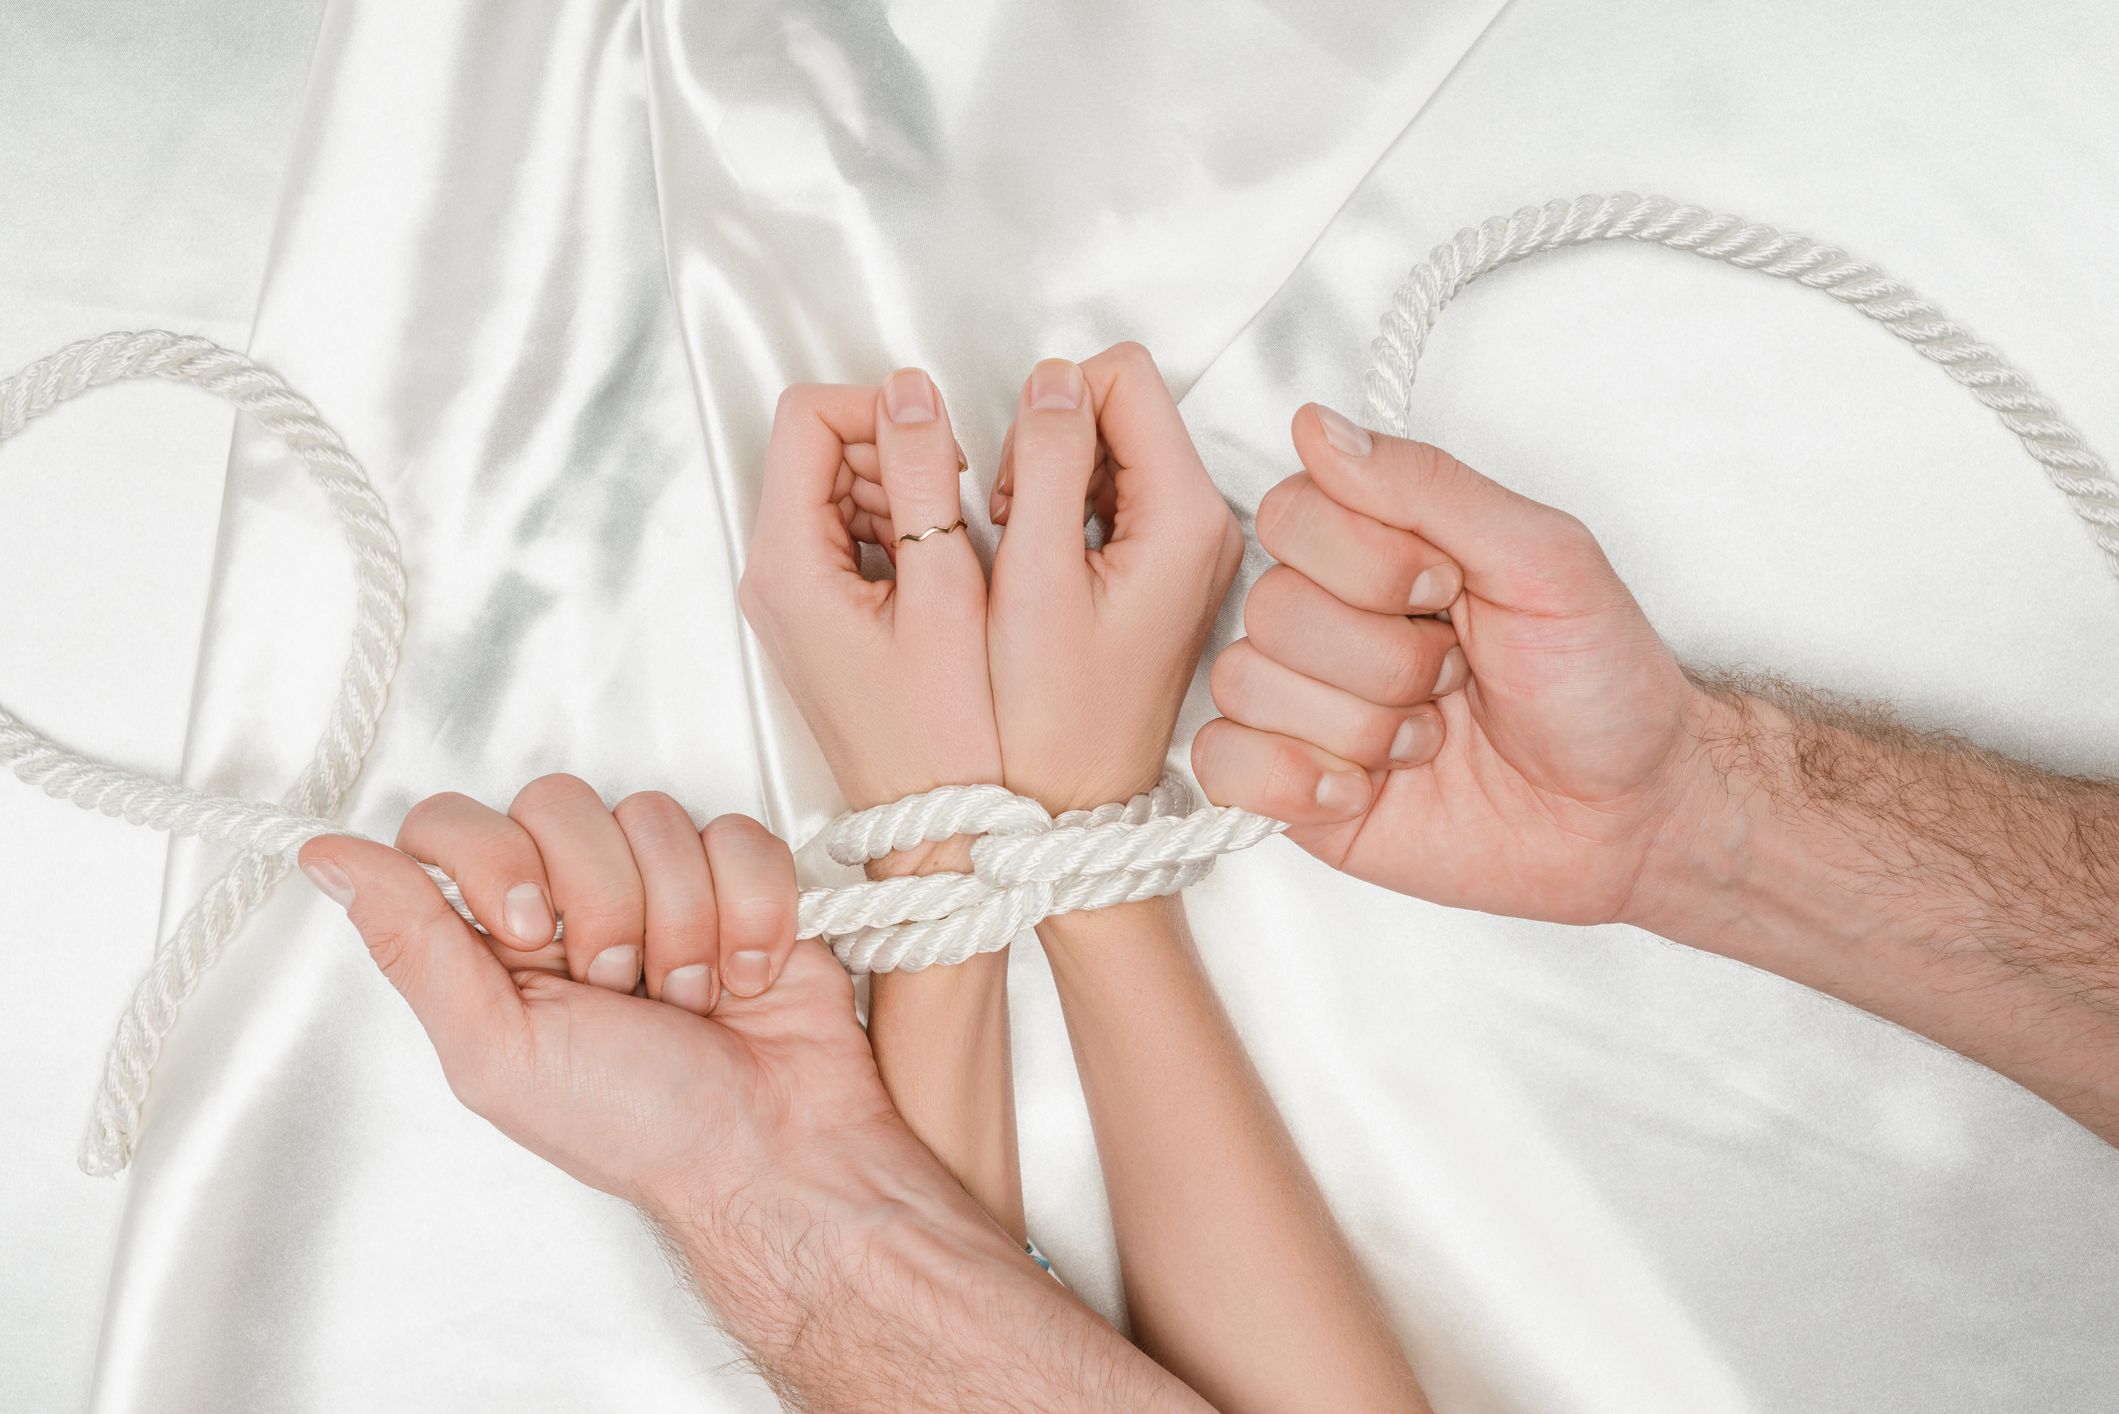 married couples bedroom bondage